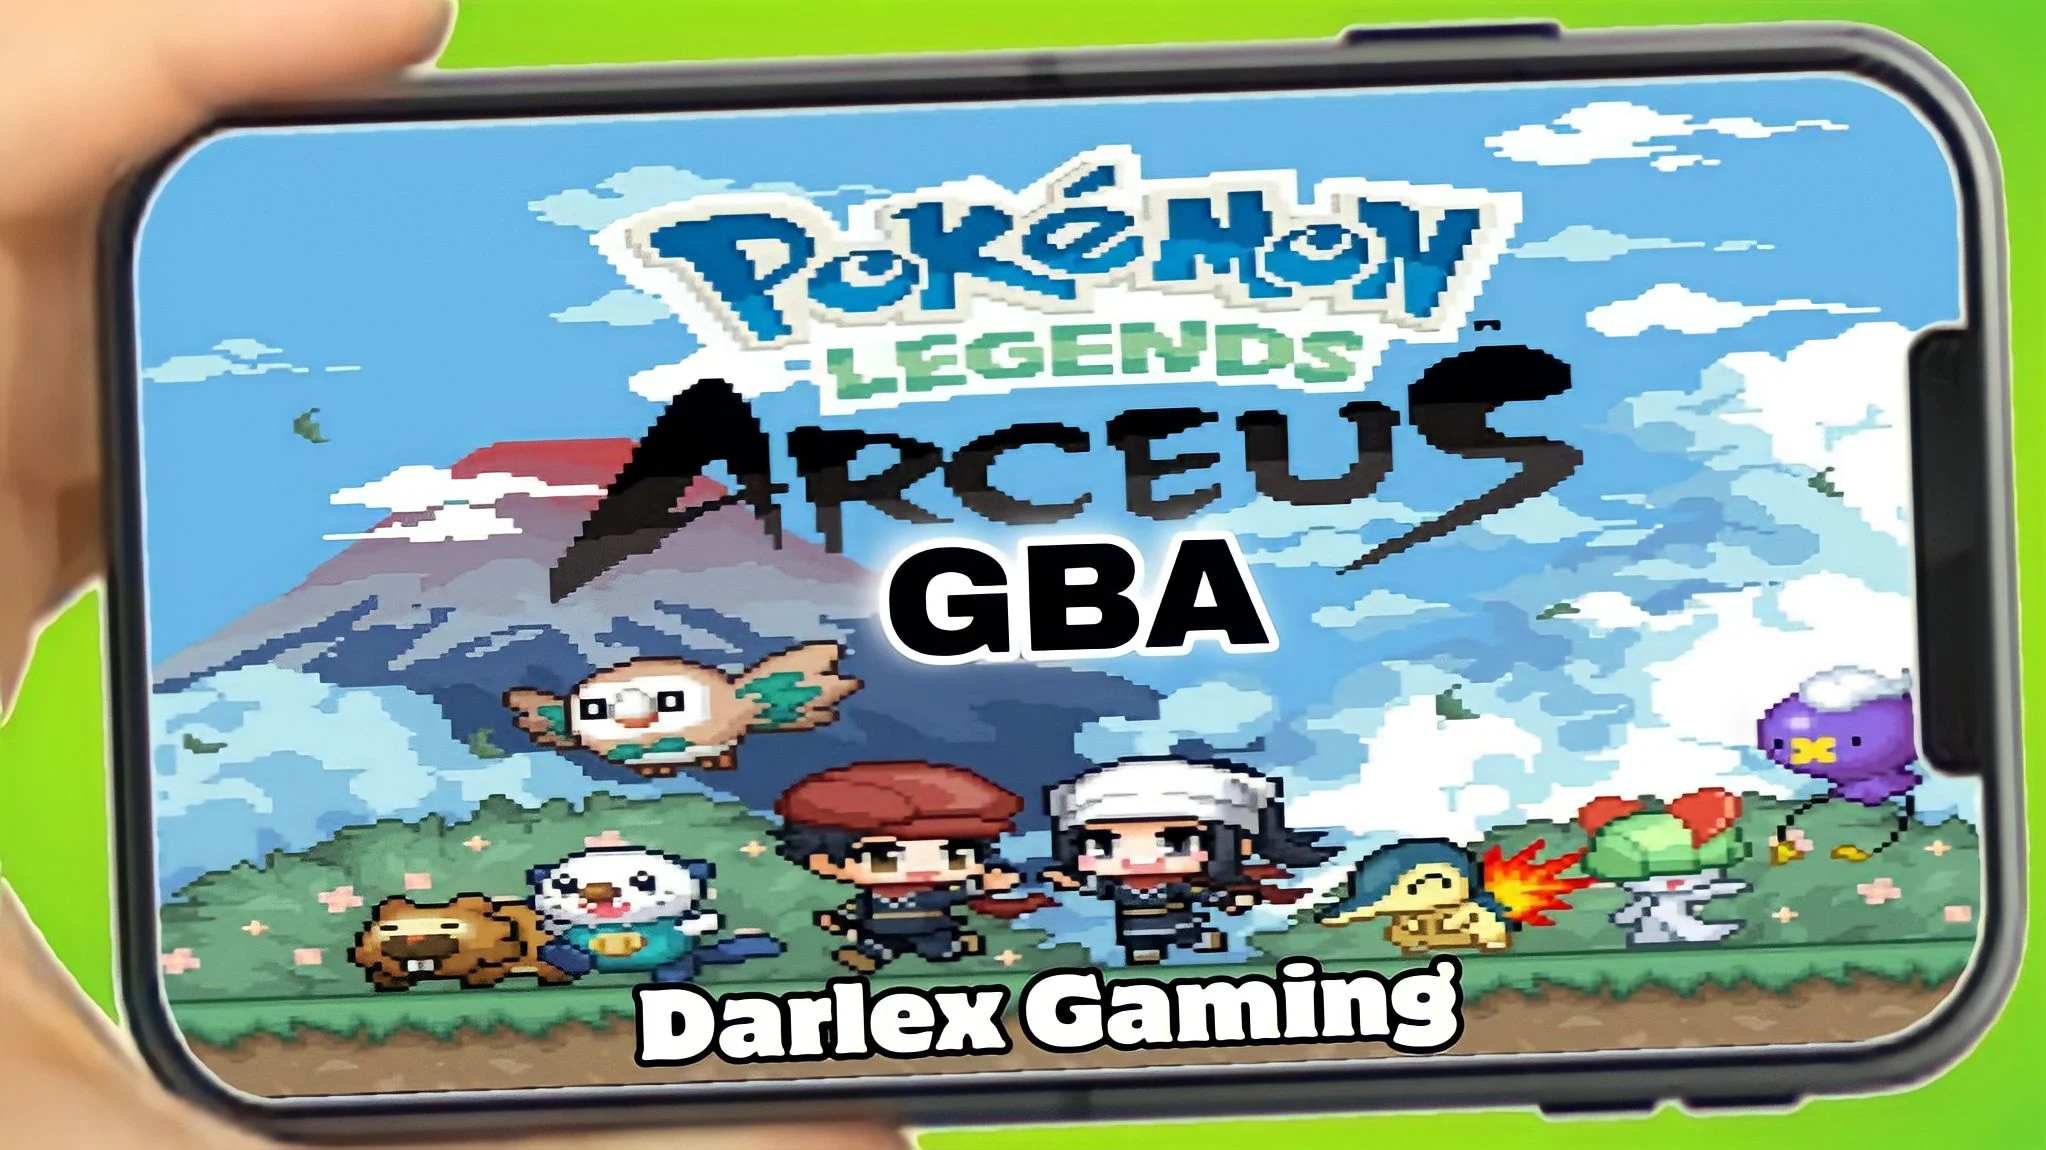 Pokemon Legends Arceus GBA - DsPoketuber